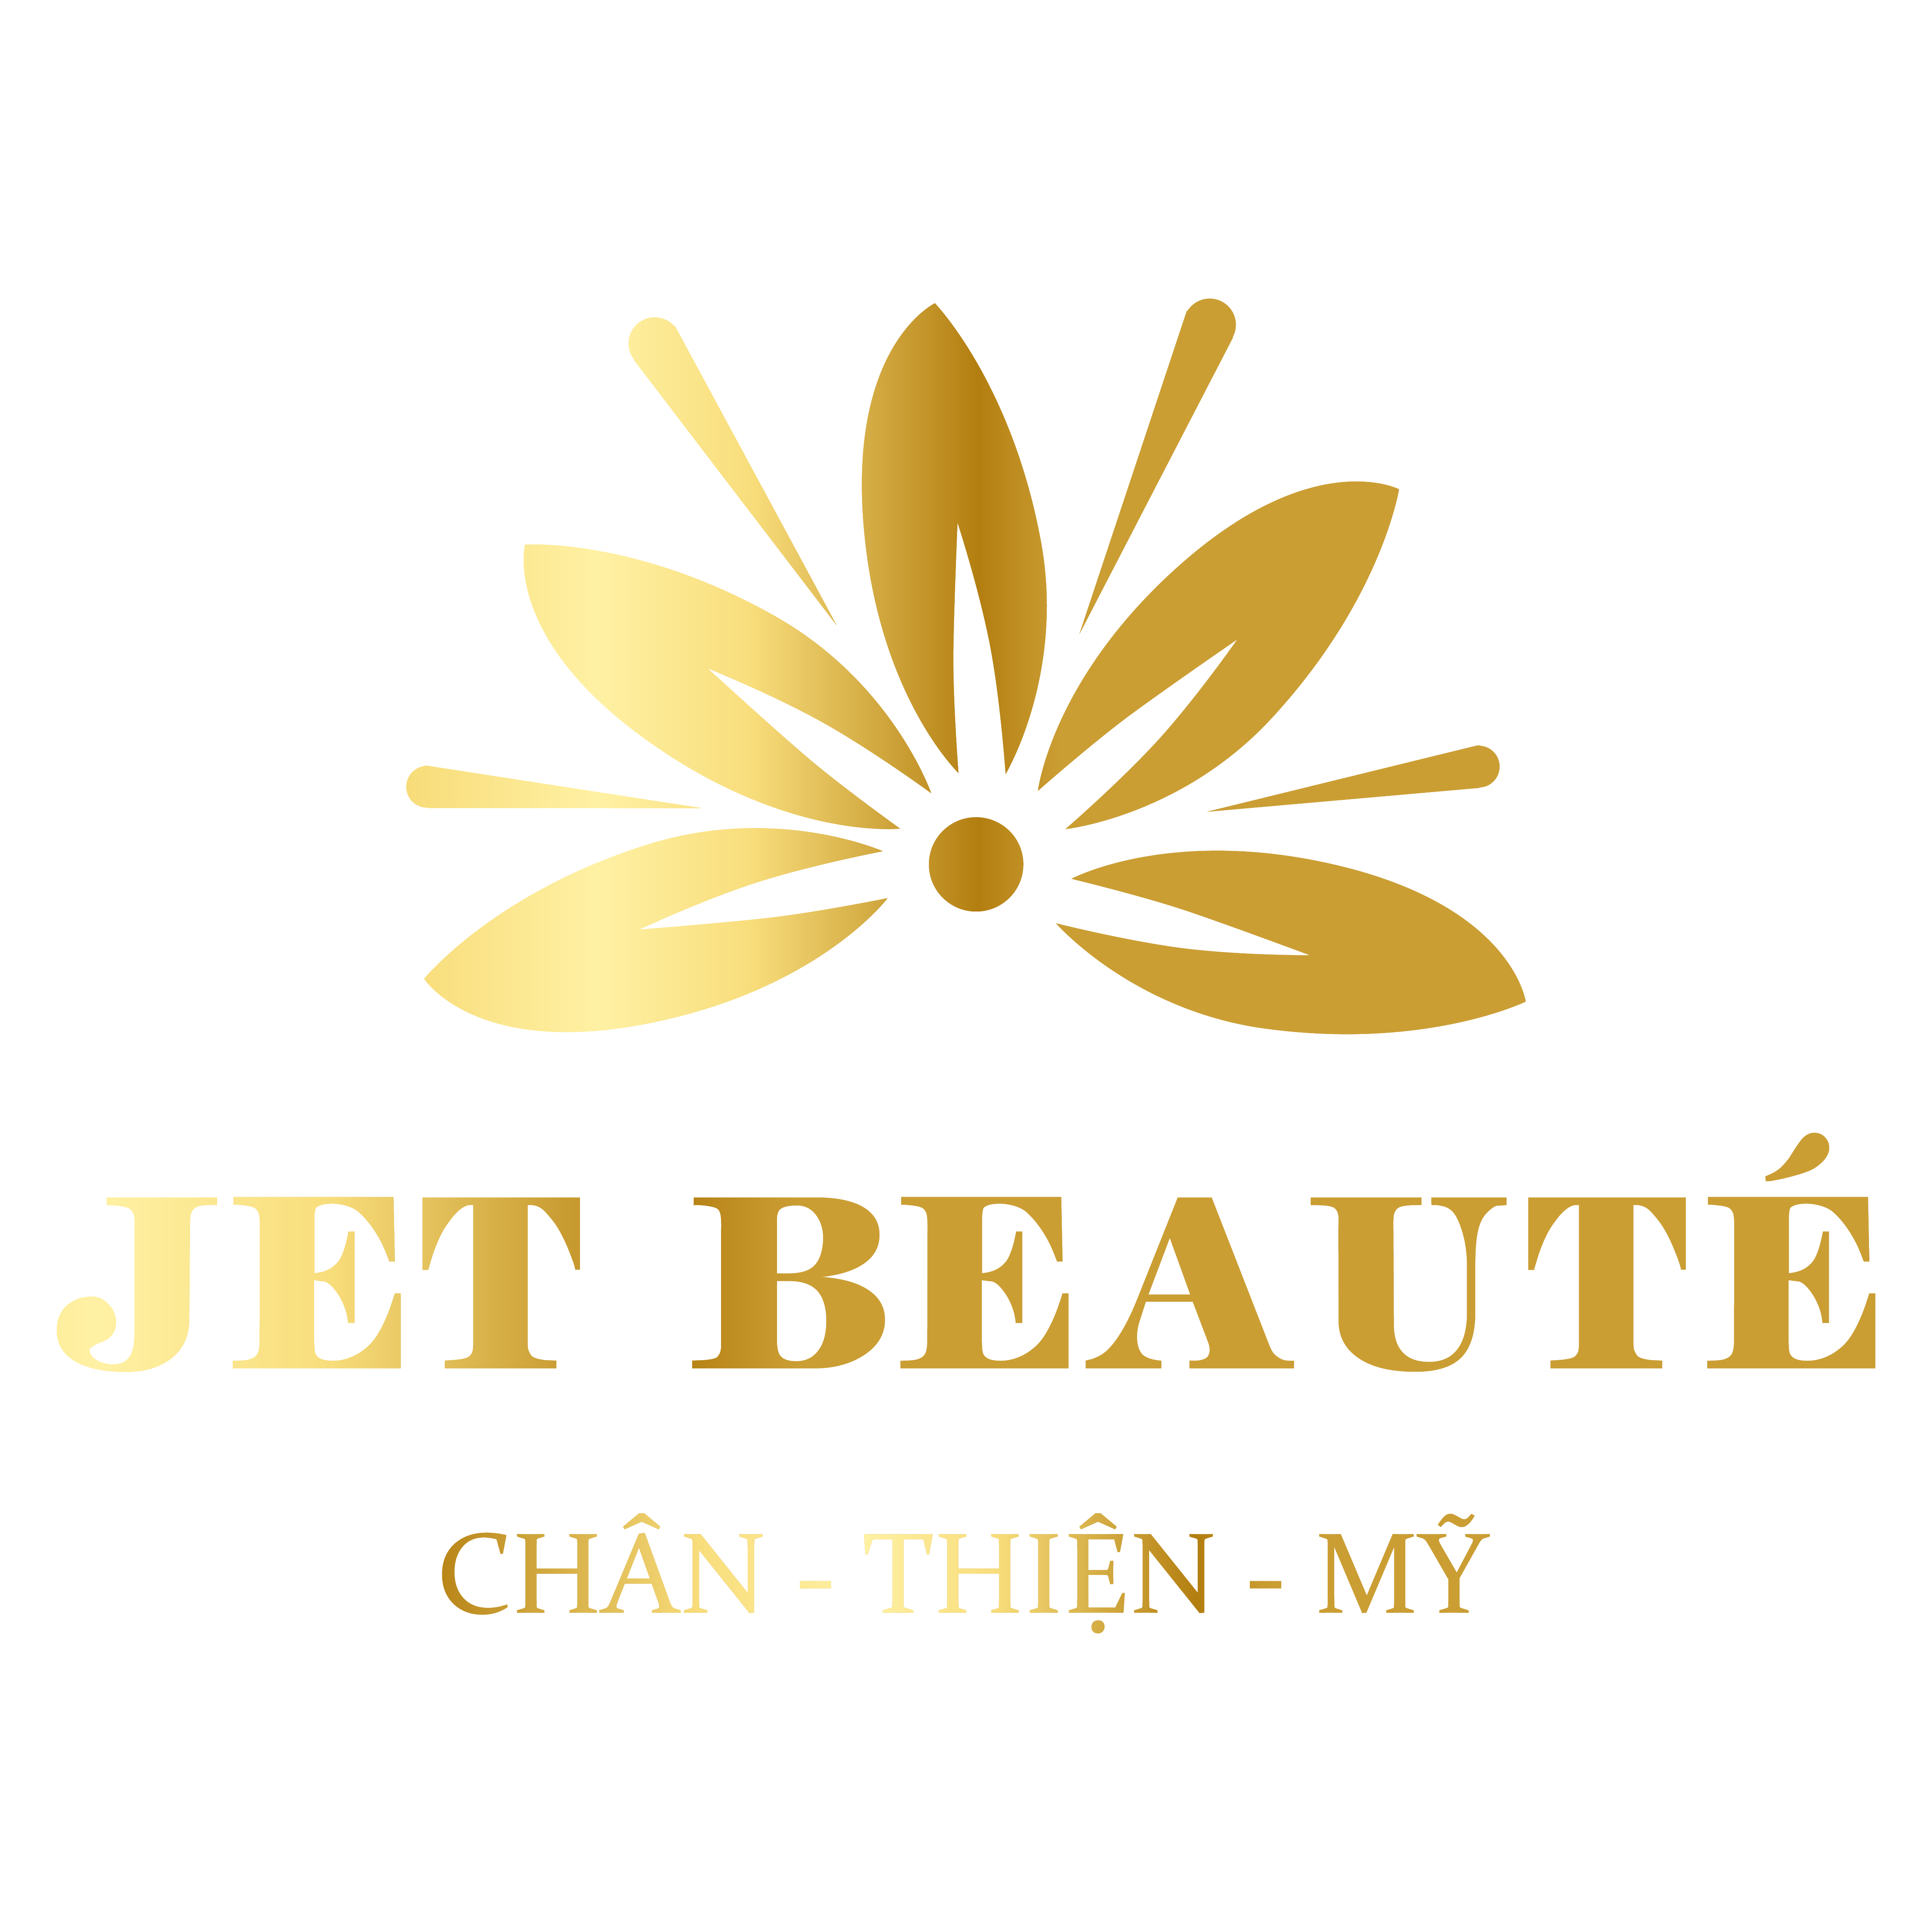 Jet Beaute